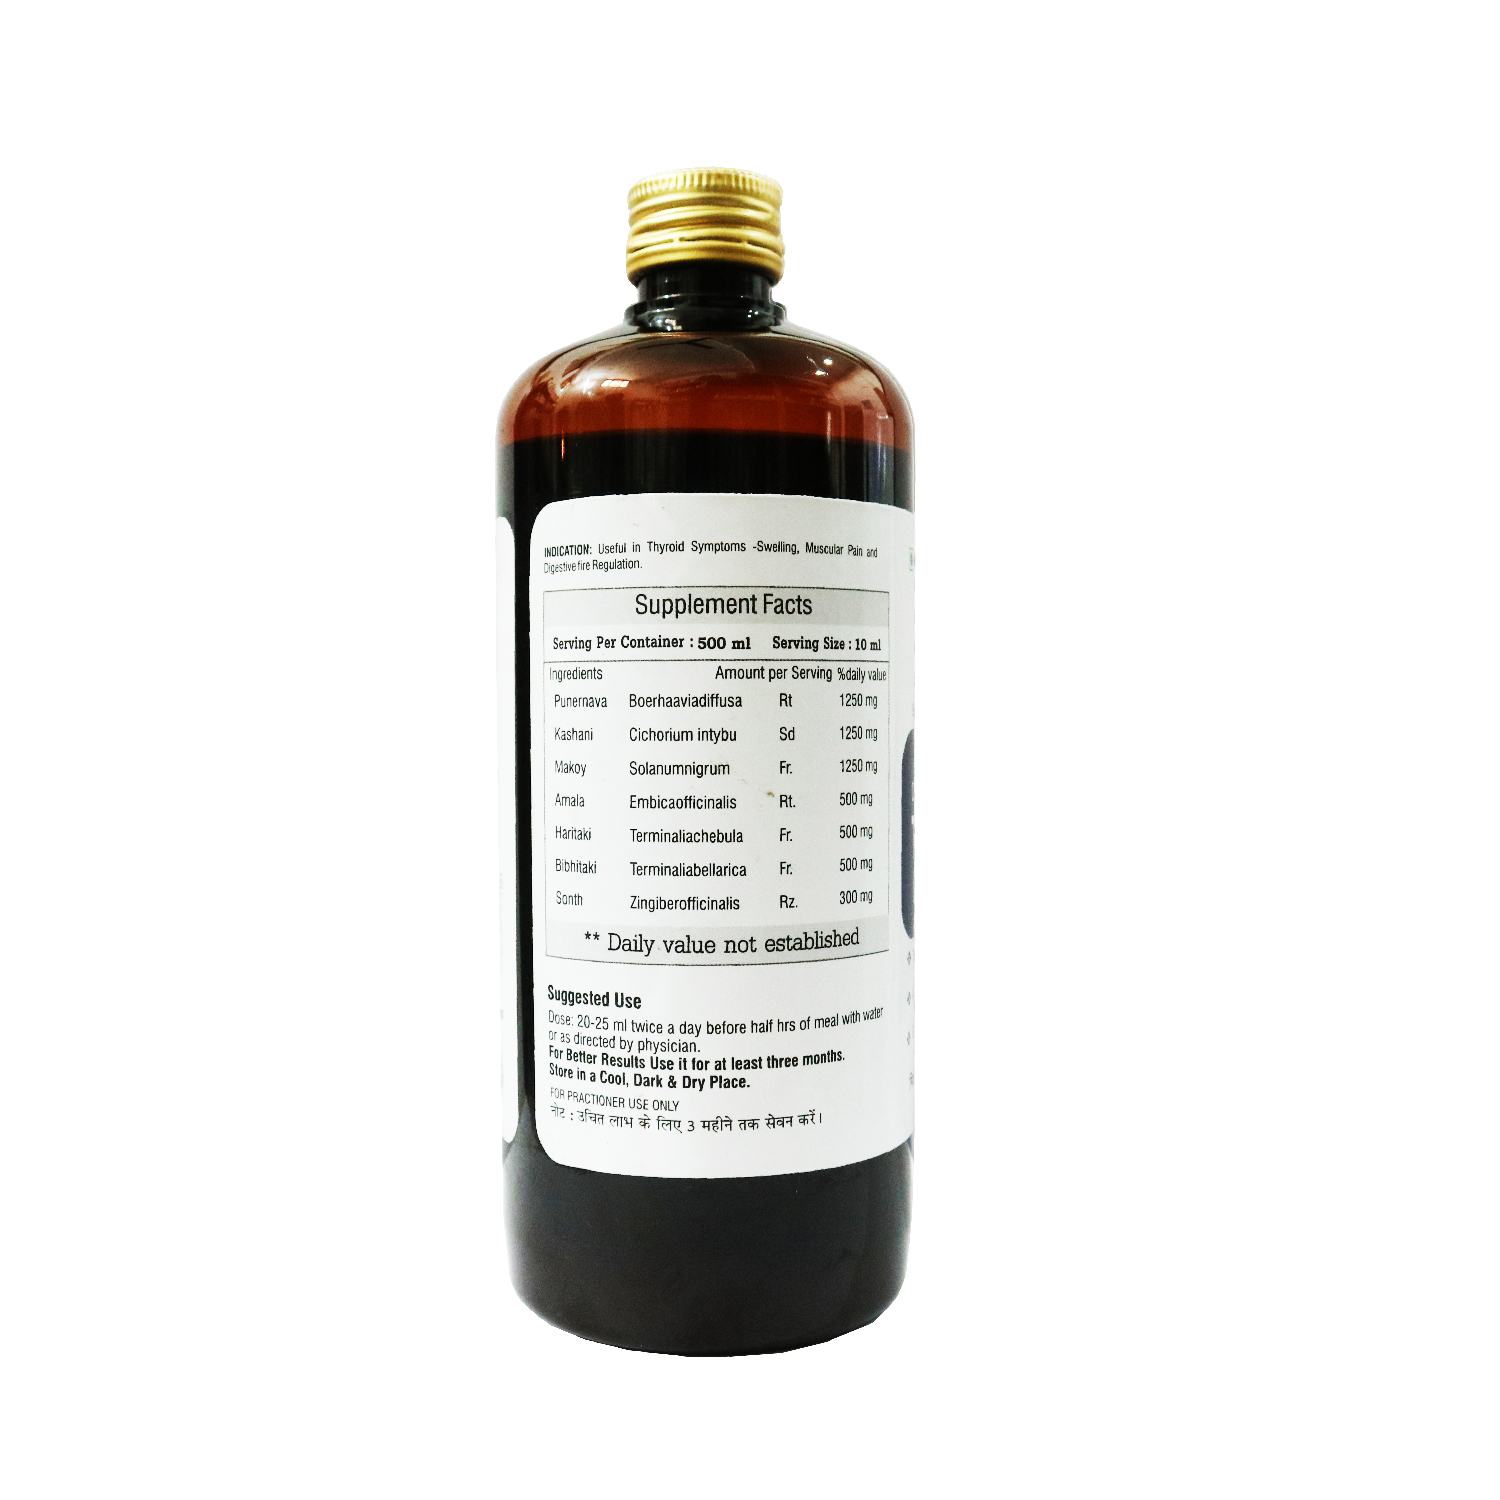 Buy Dr. Bhargav's Thyro-Safa Syrup - 500ml at Best Price Online